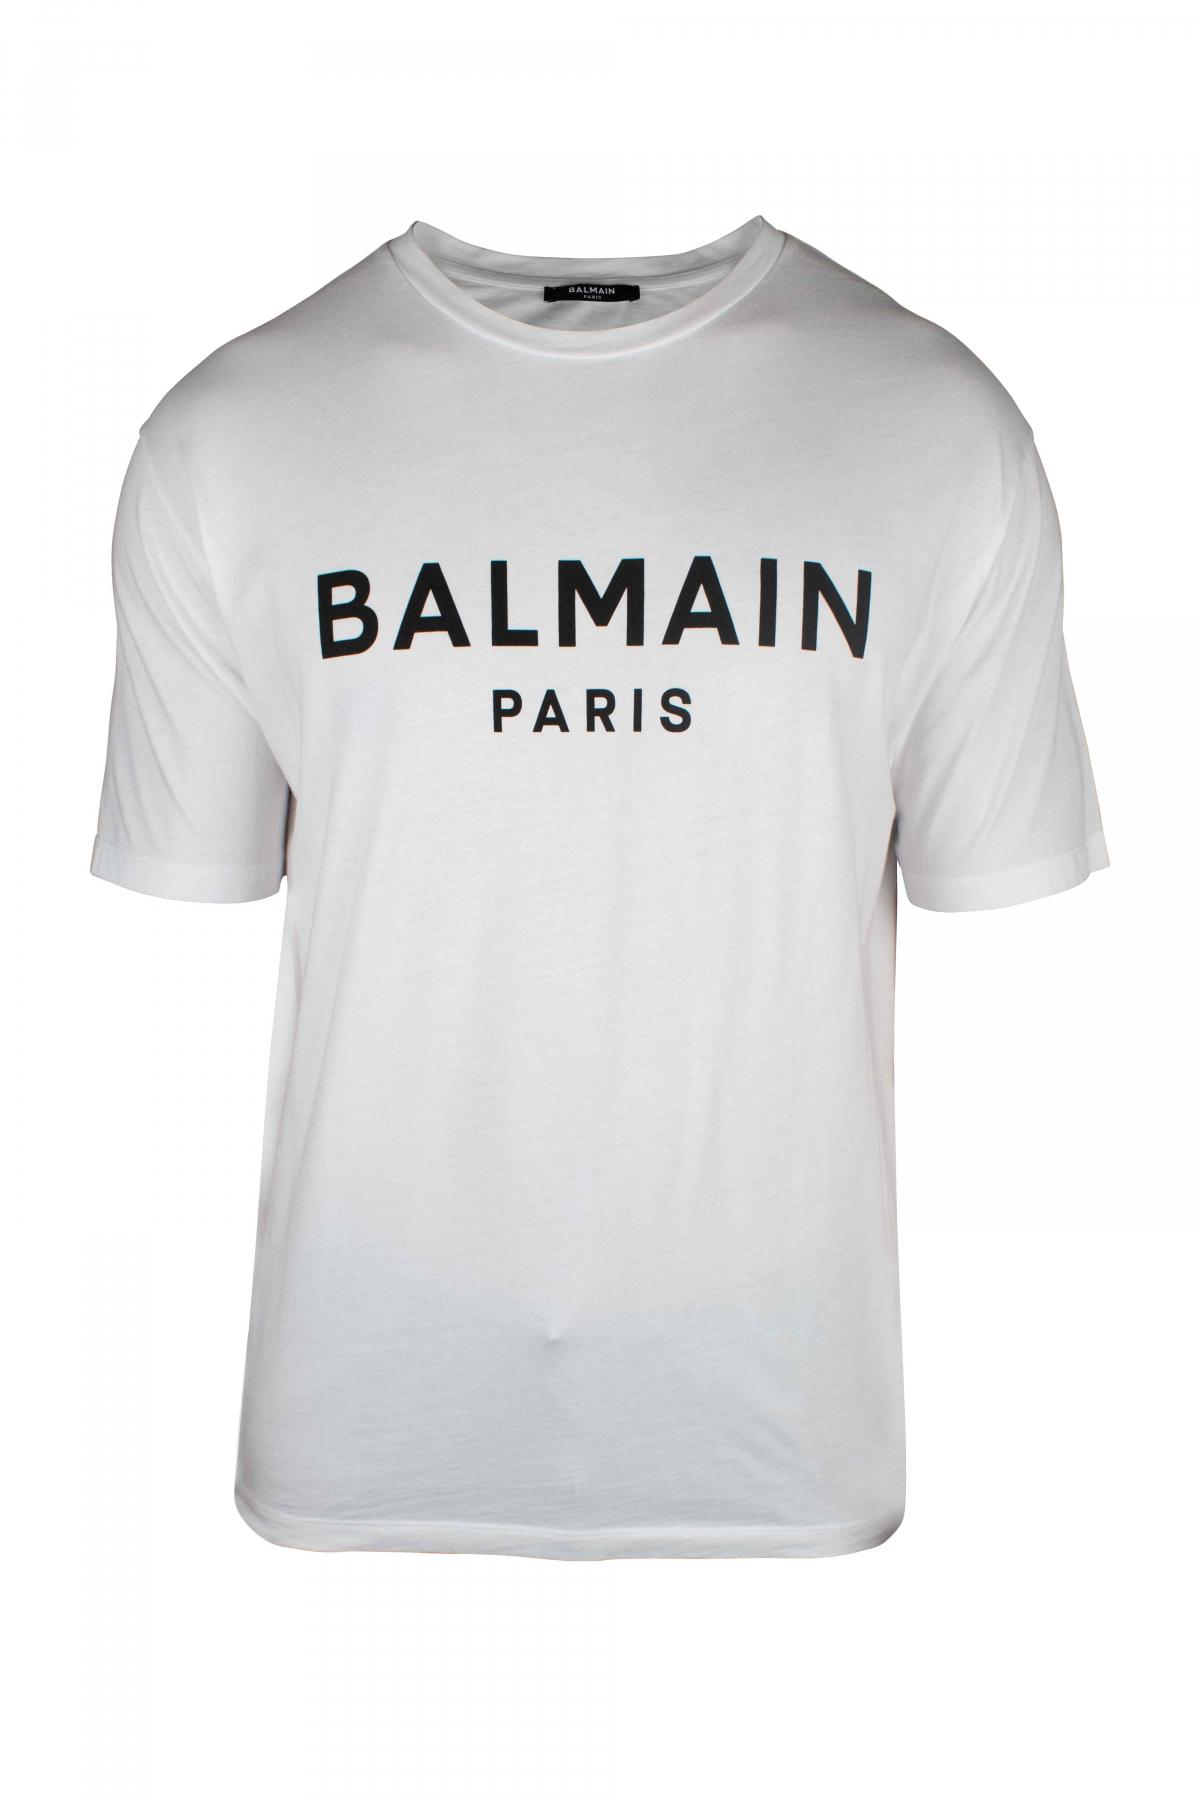 Balmain T-shirt in Gray for Men | Lyst